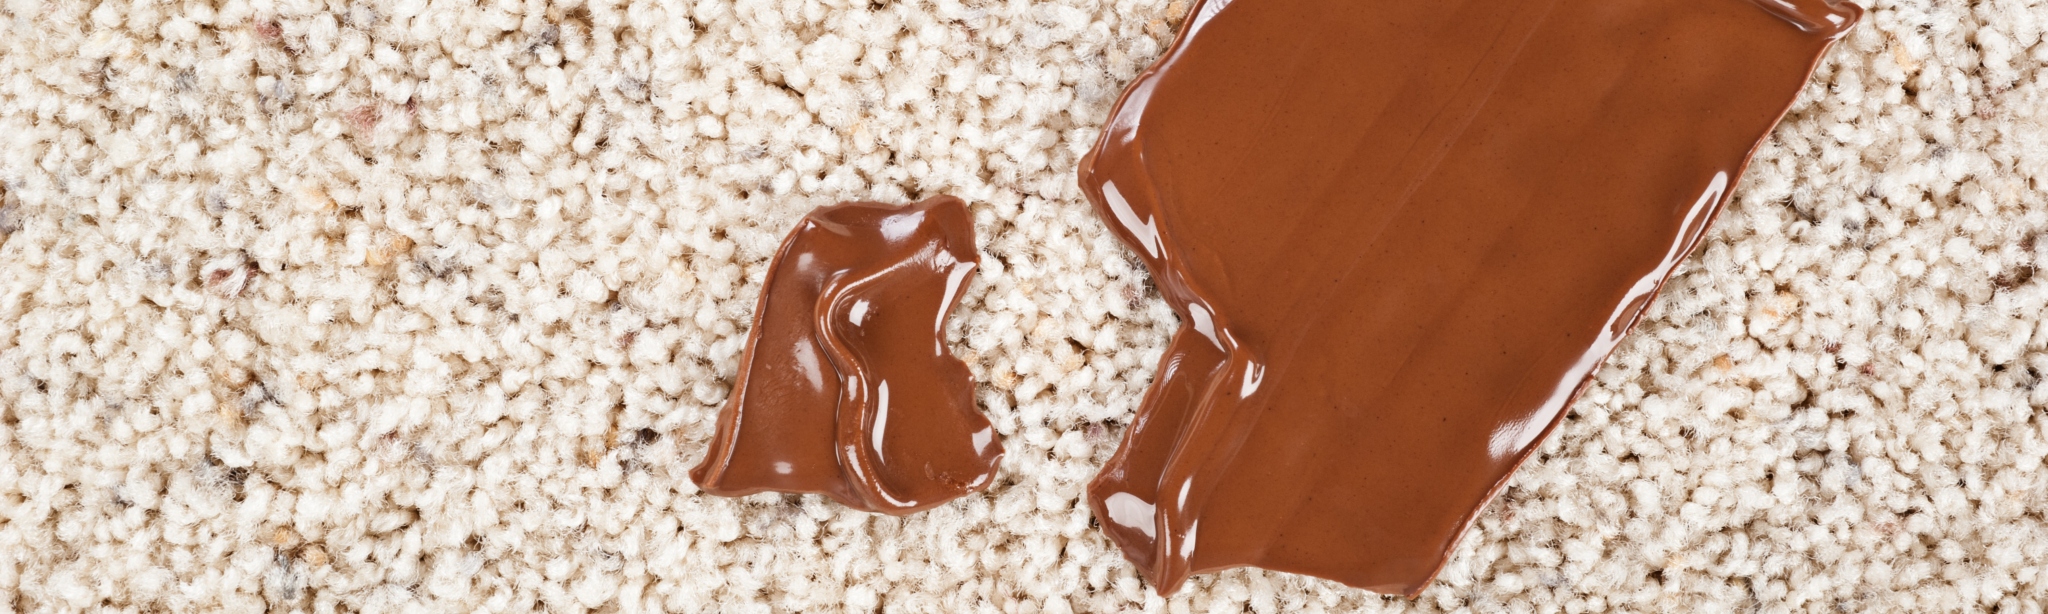 Chocolate bar on carpet